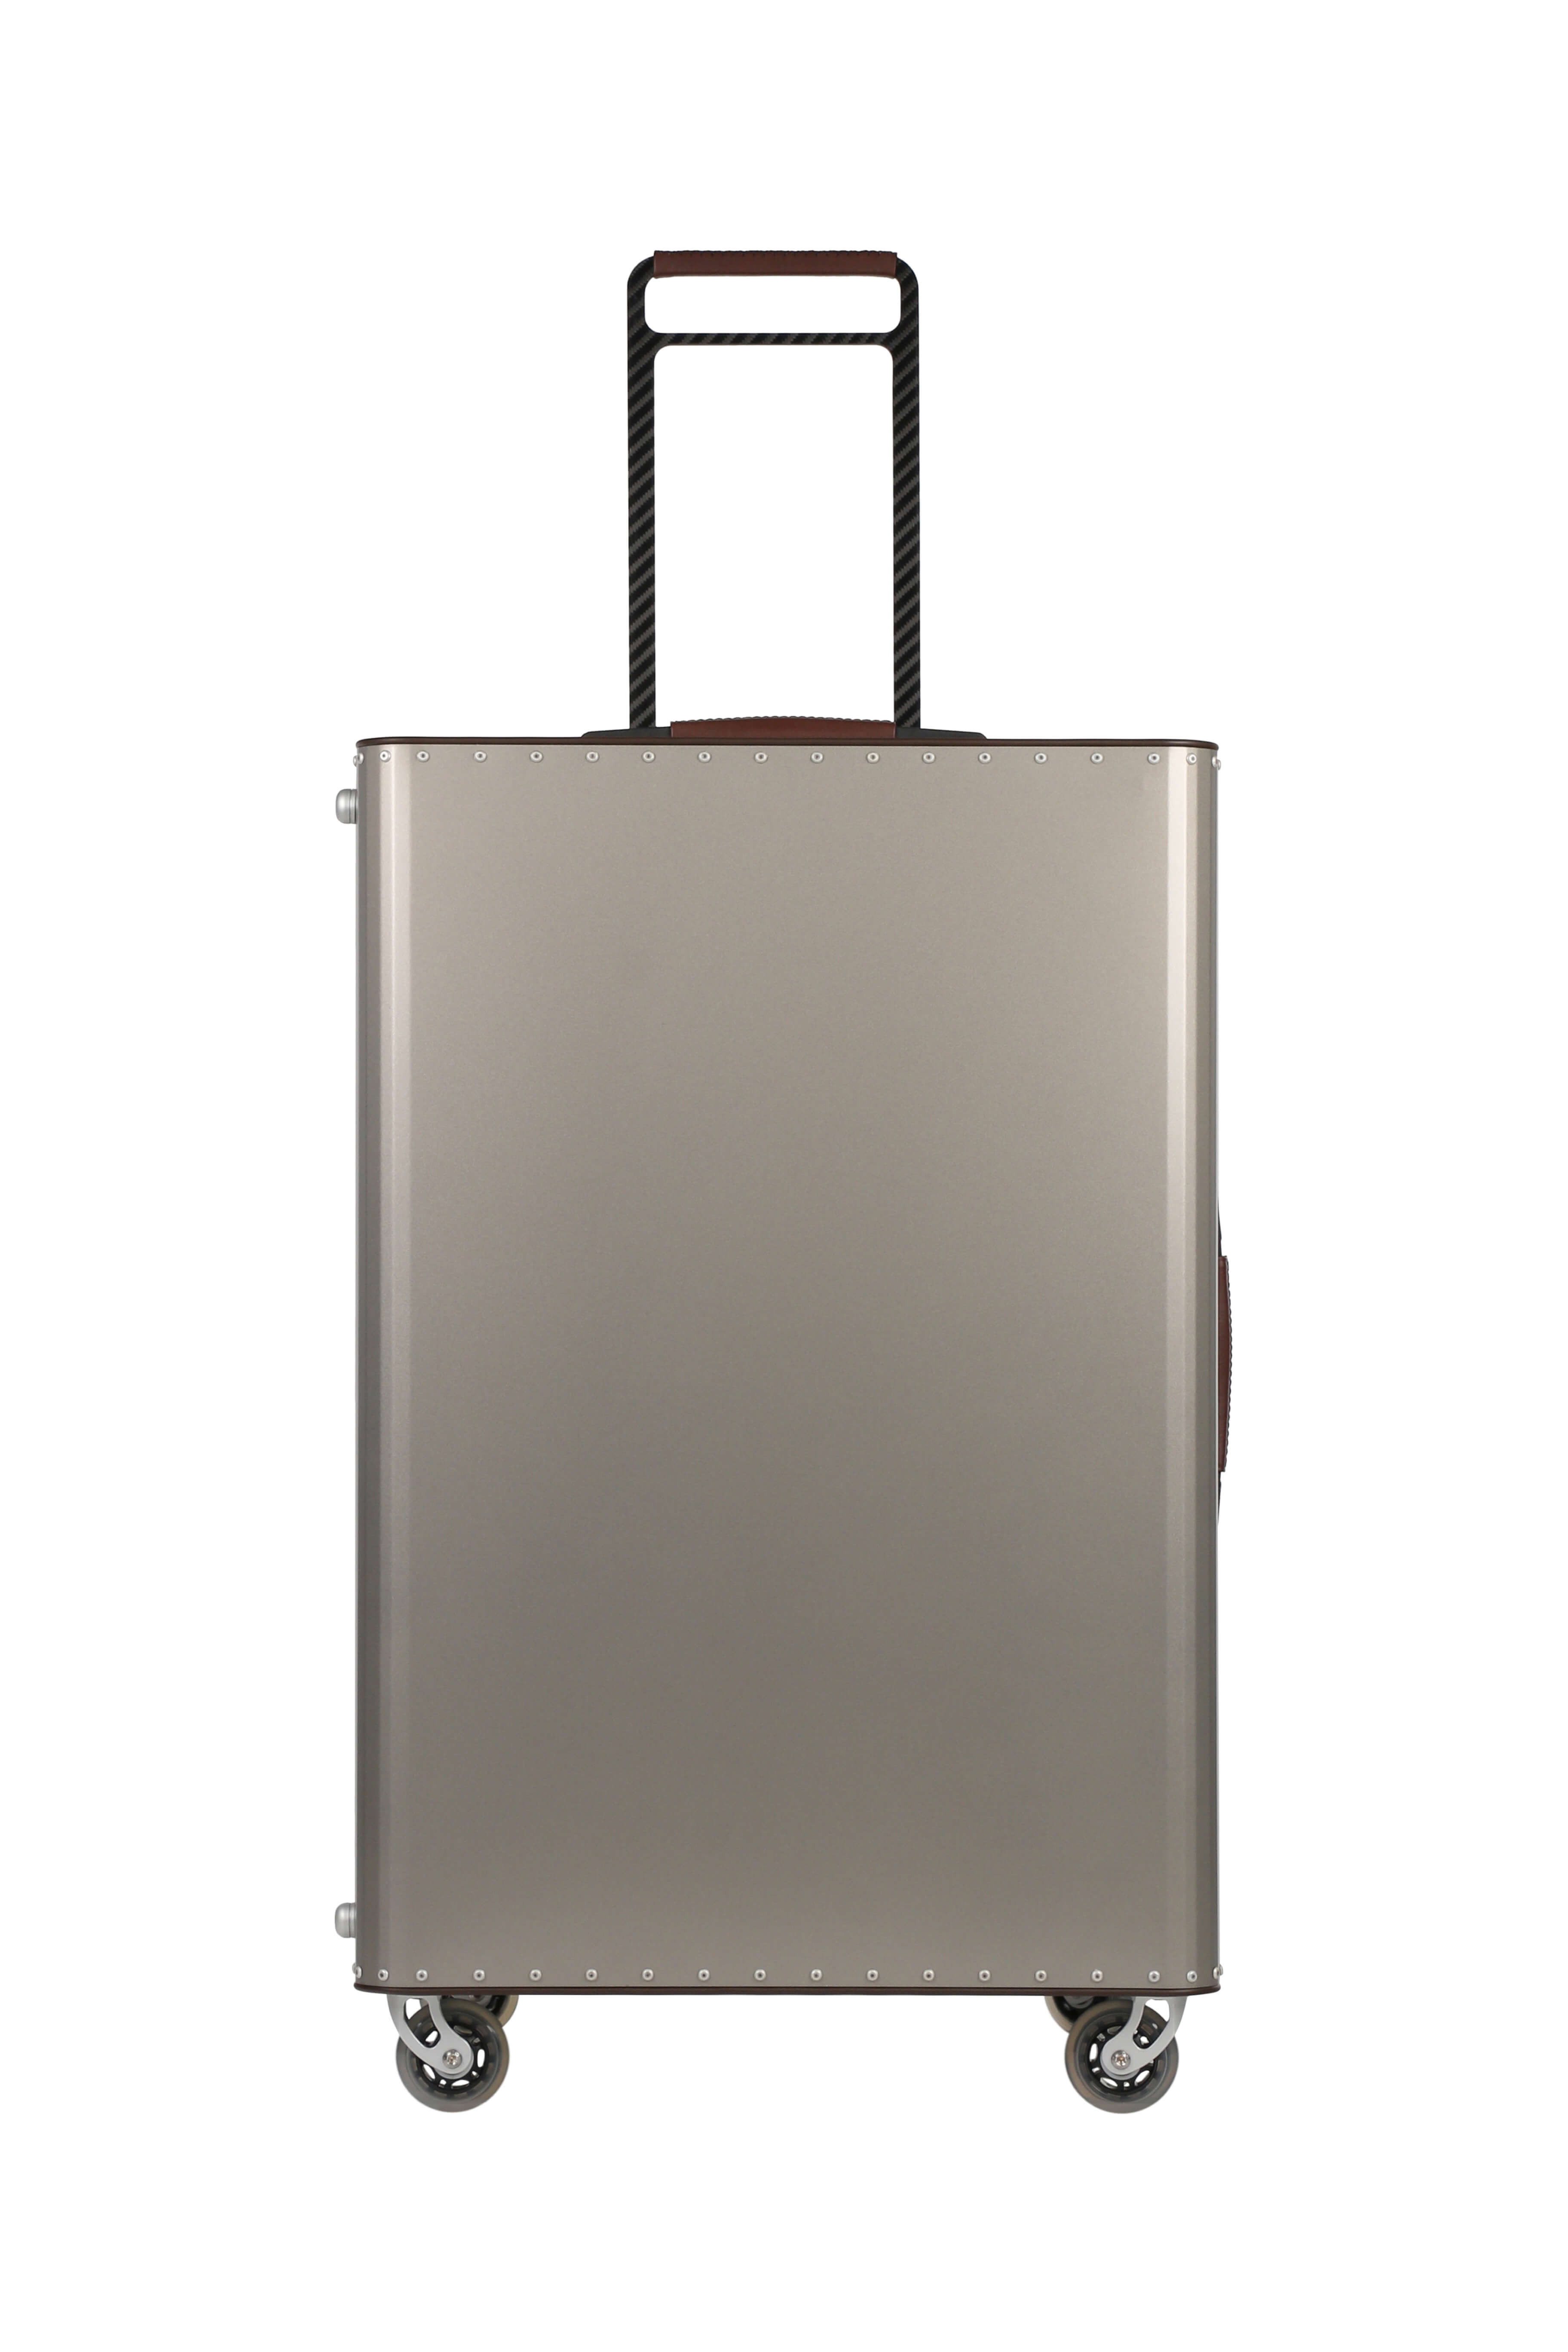 Kronos Titanium Check-In Luggage, Chestnut